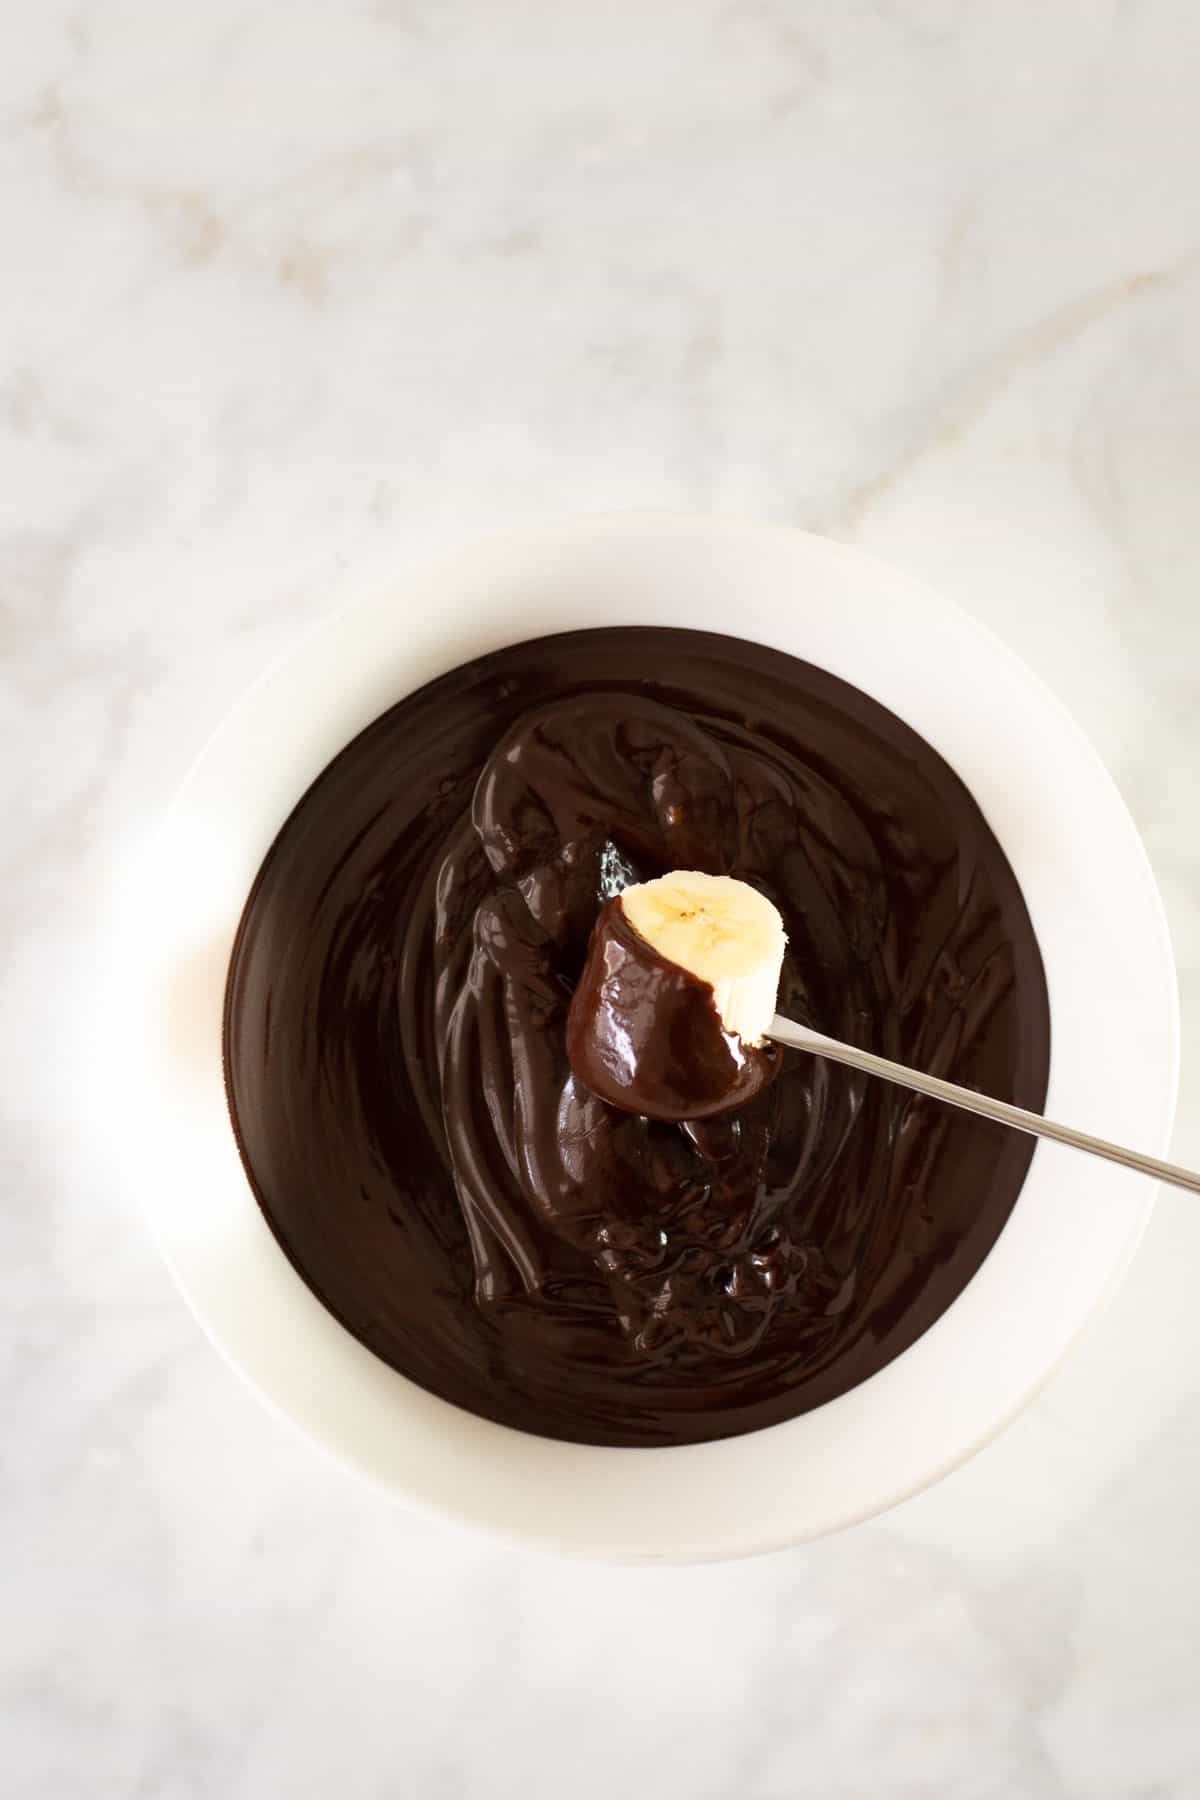 banana being dipped into chocolate fondue